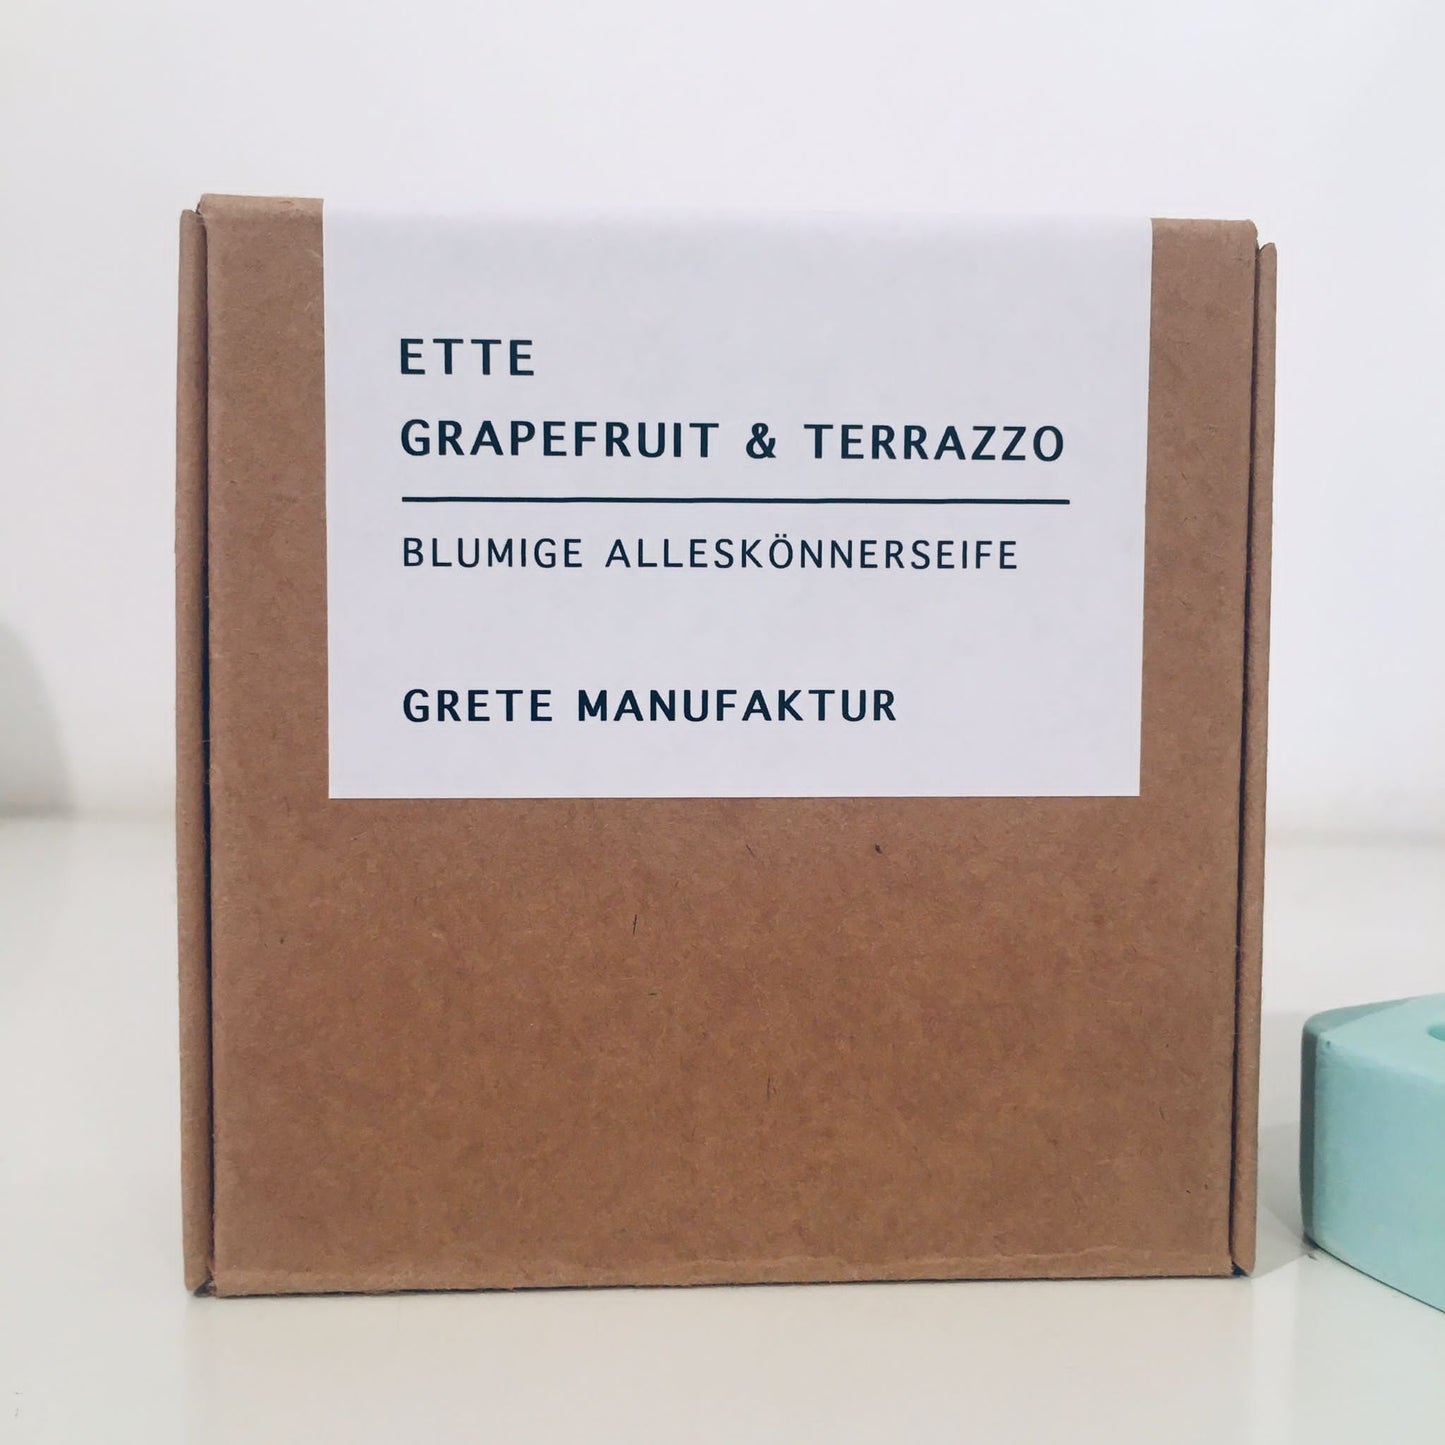 Seife // ETTE Grapefruit & Terrazzo